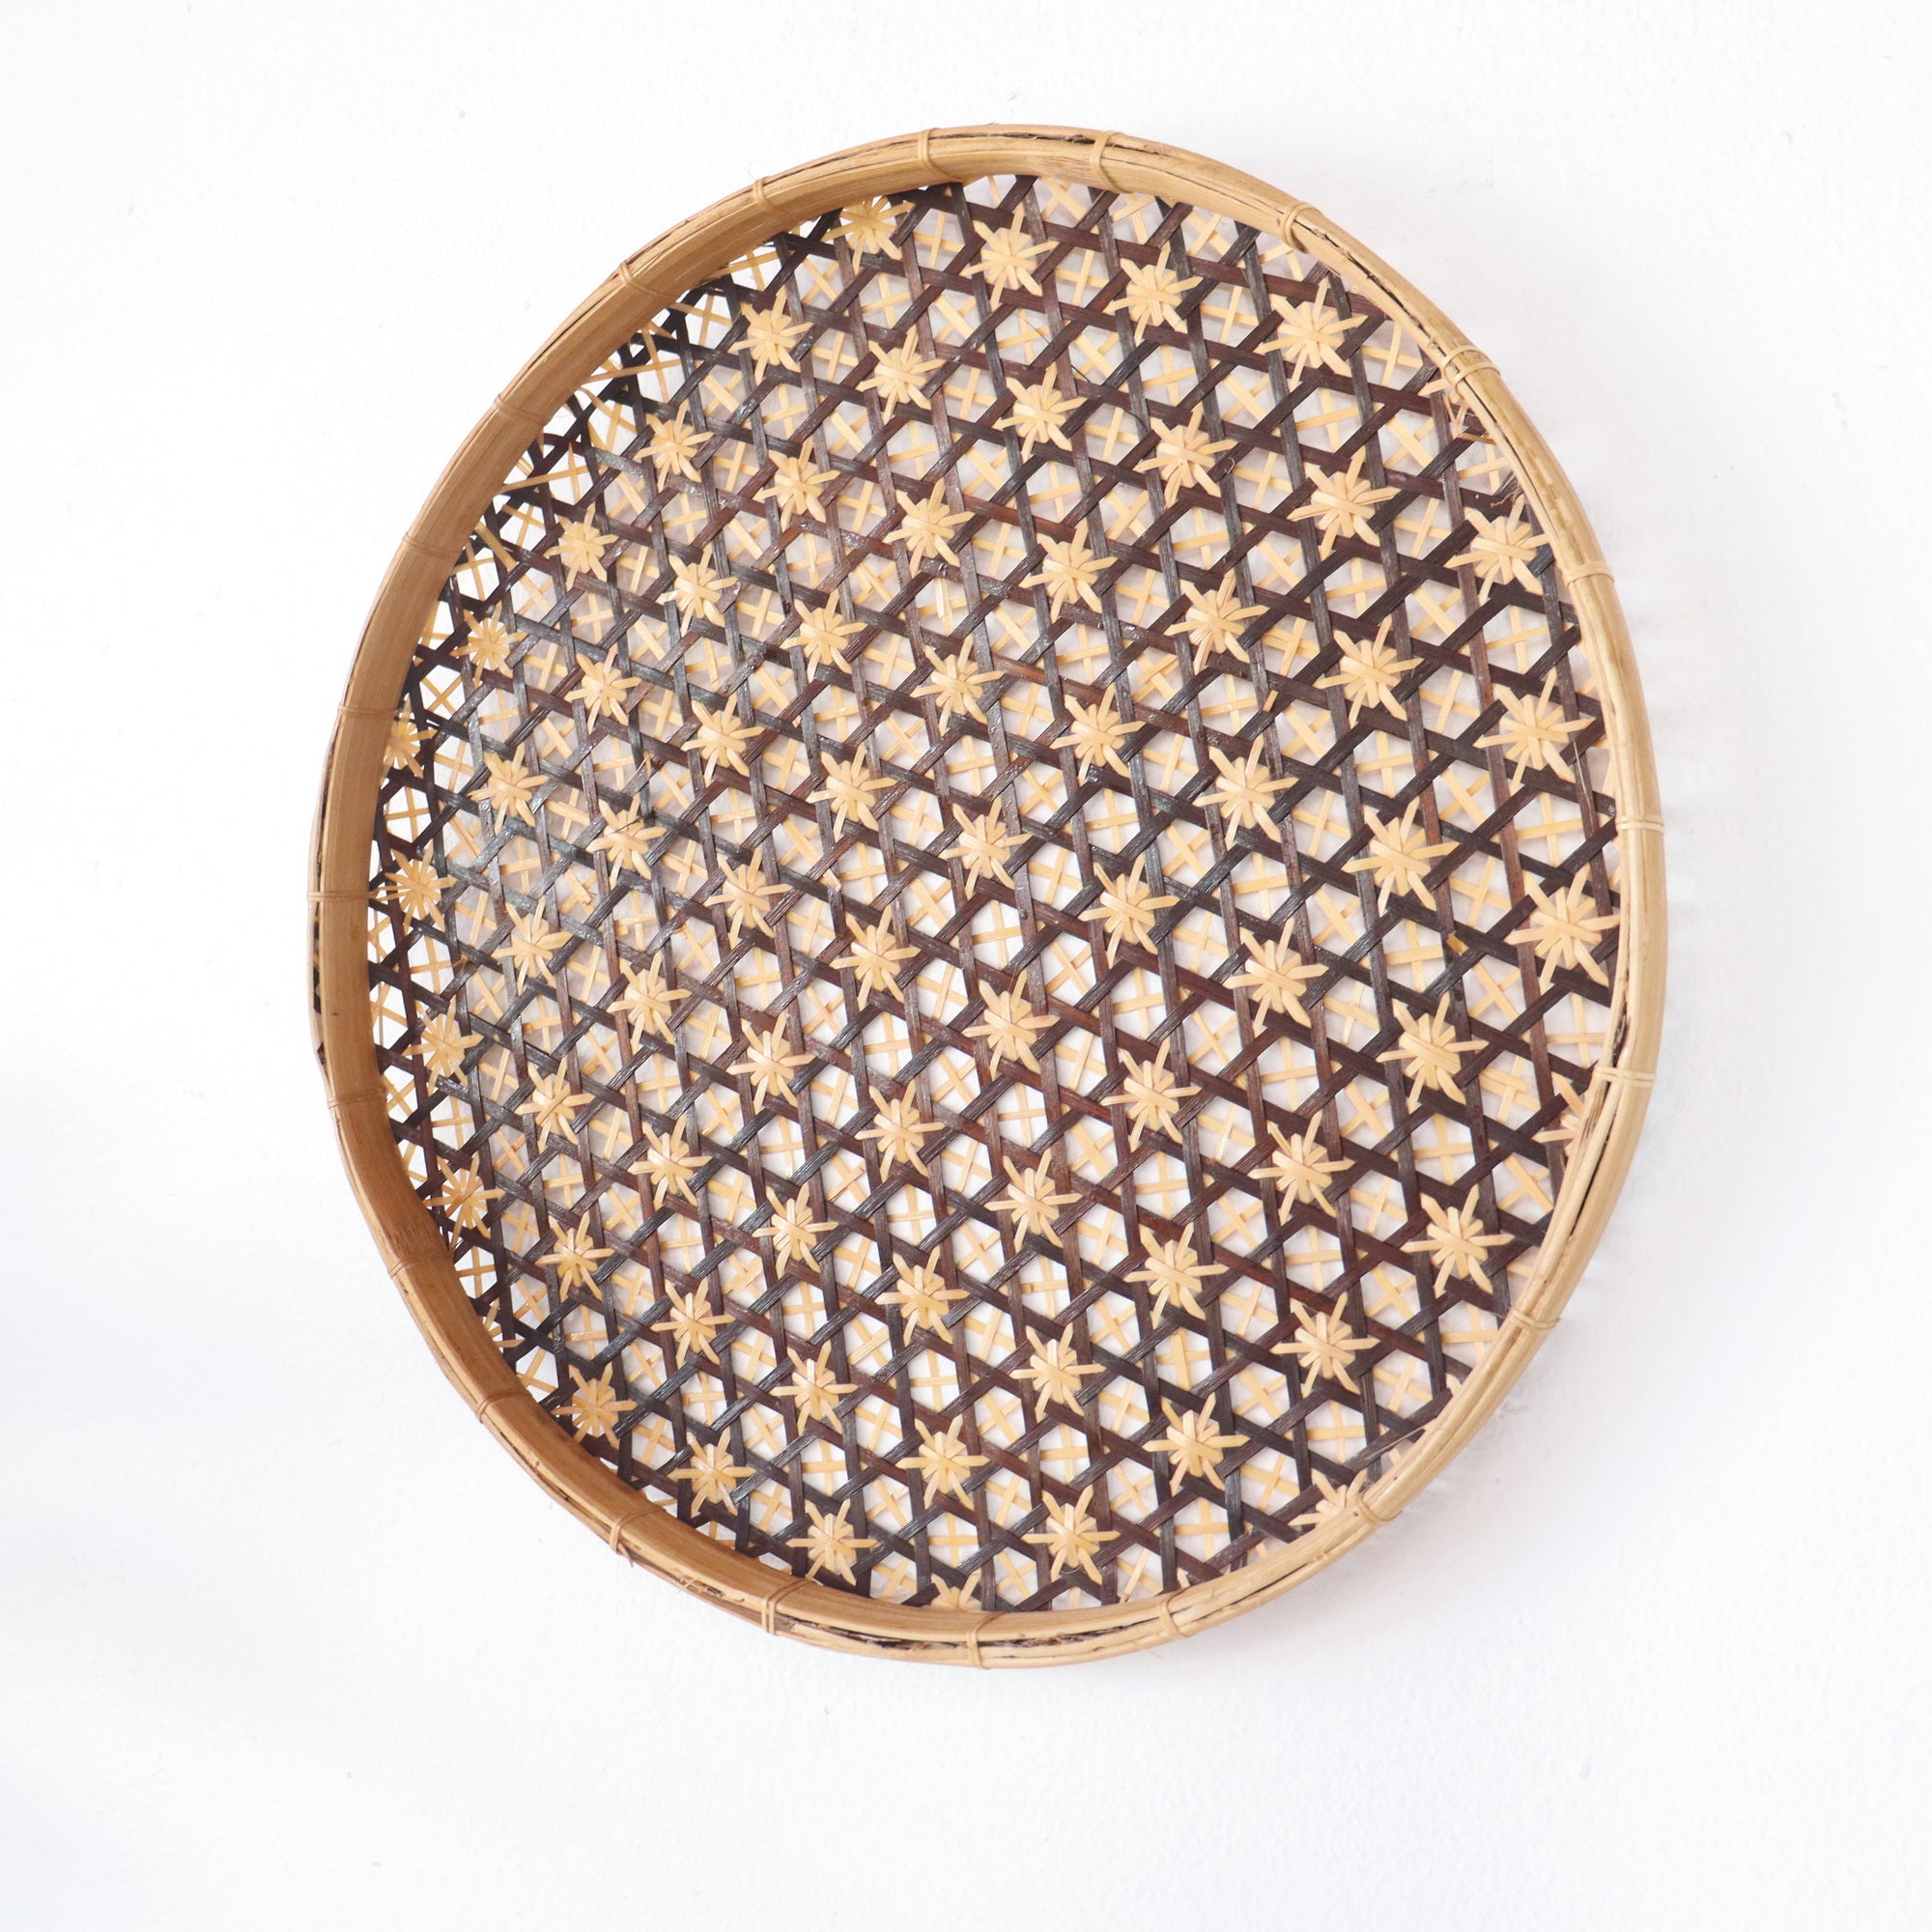 SA SI PIM - DIY Wall Art Basket Decor 14 inches